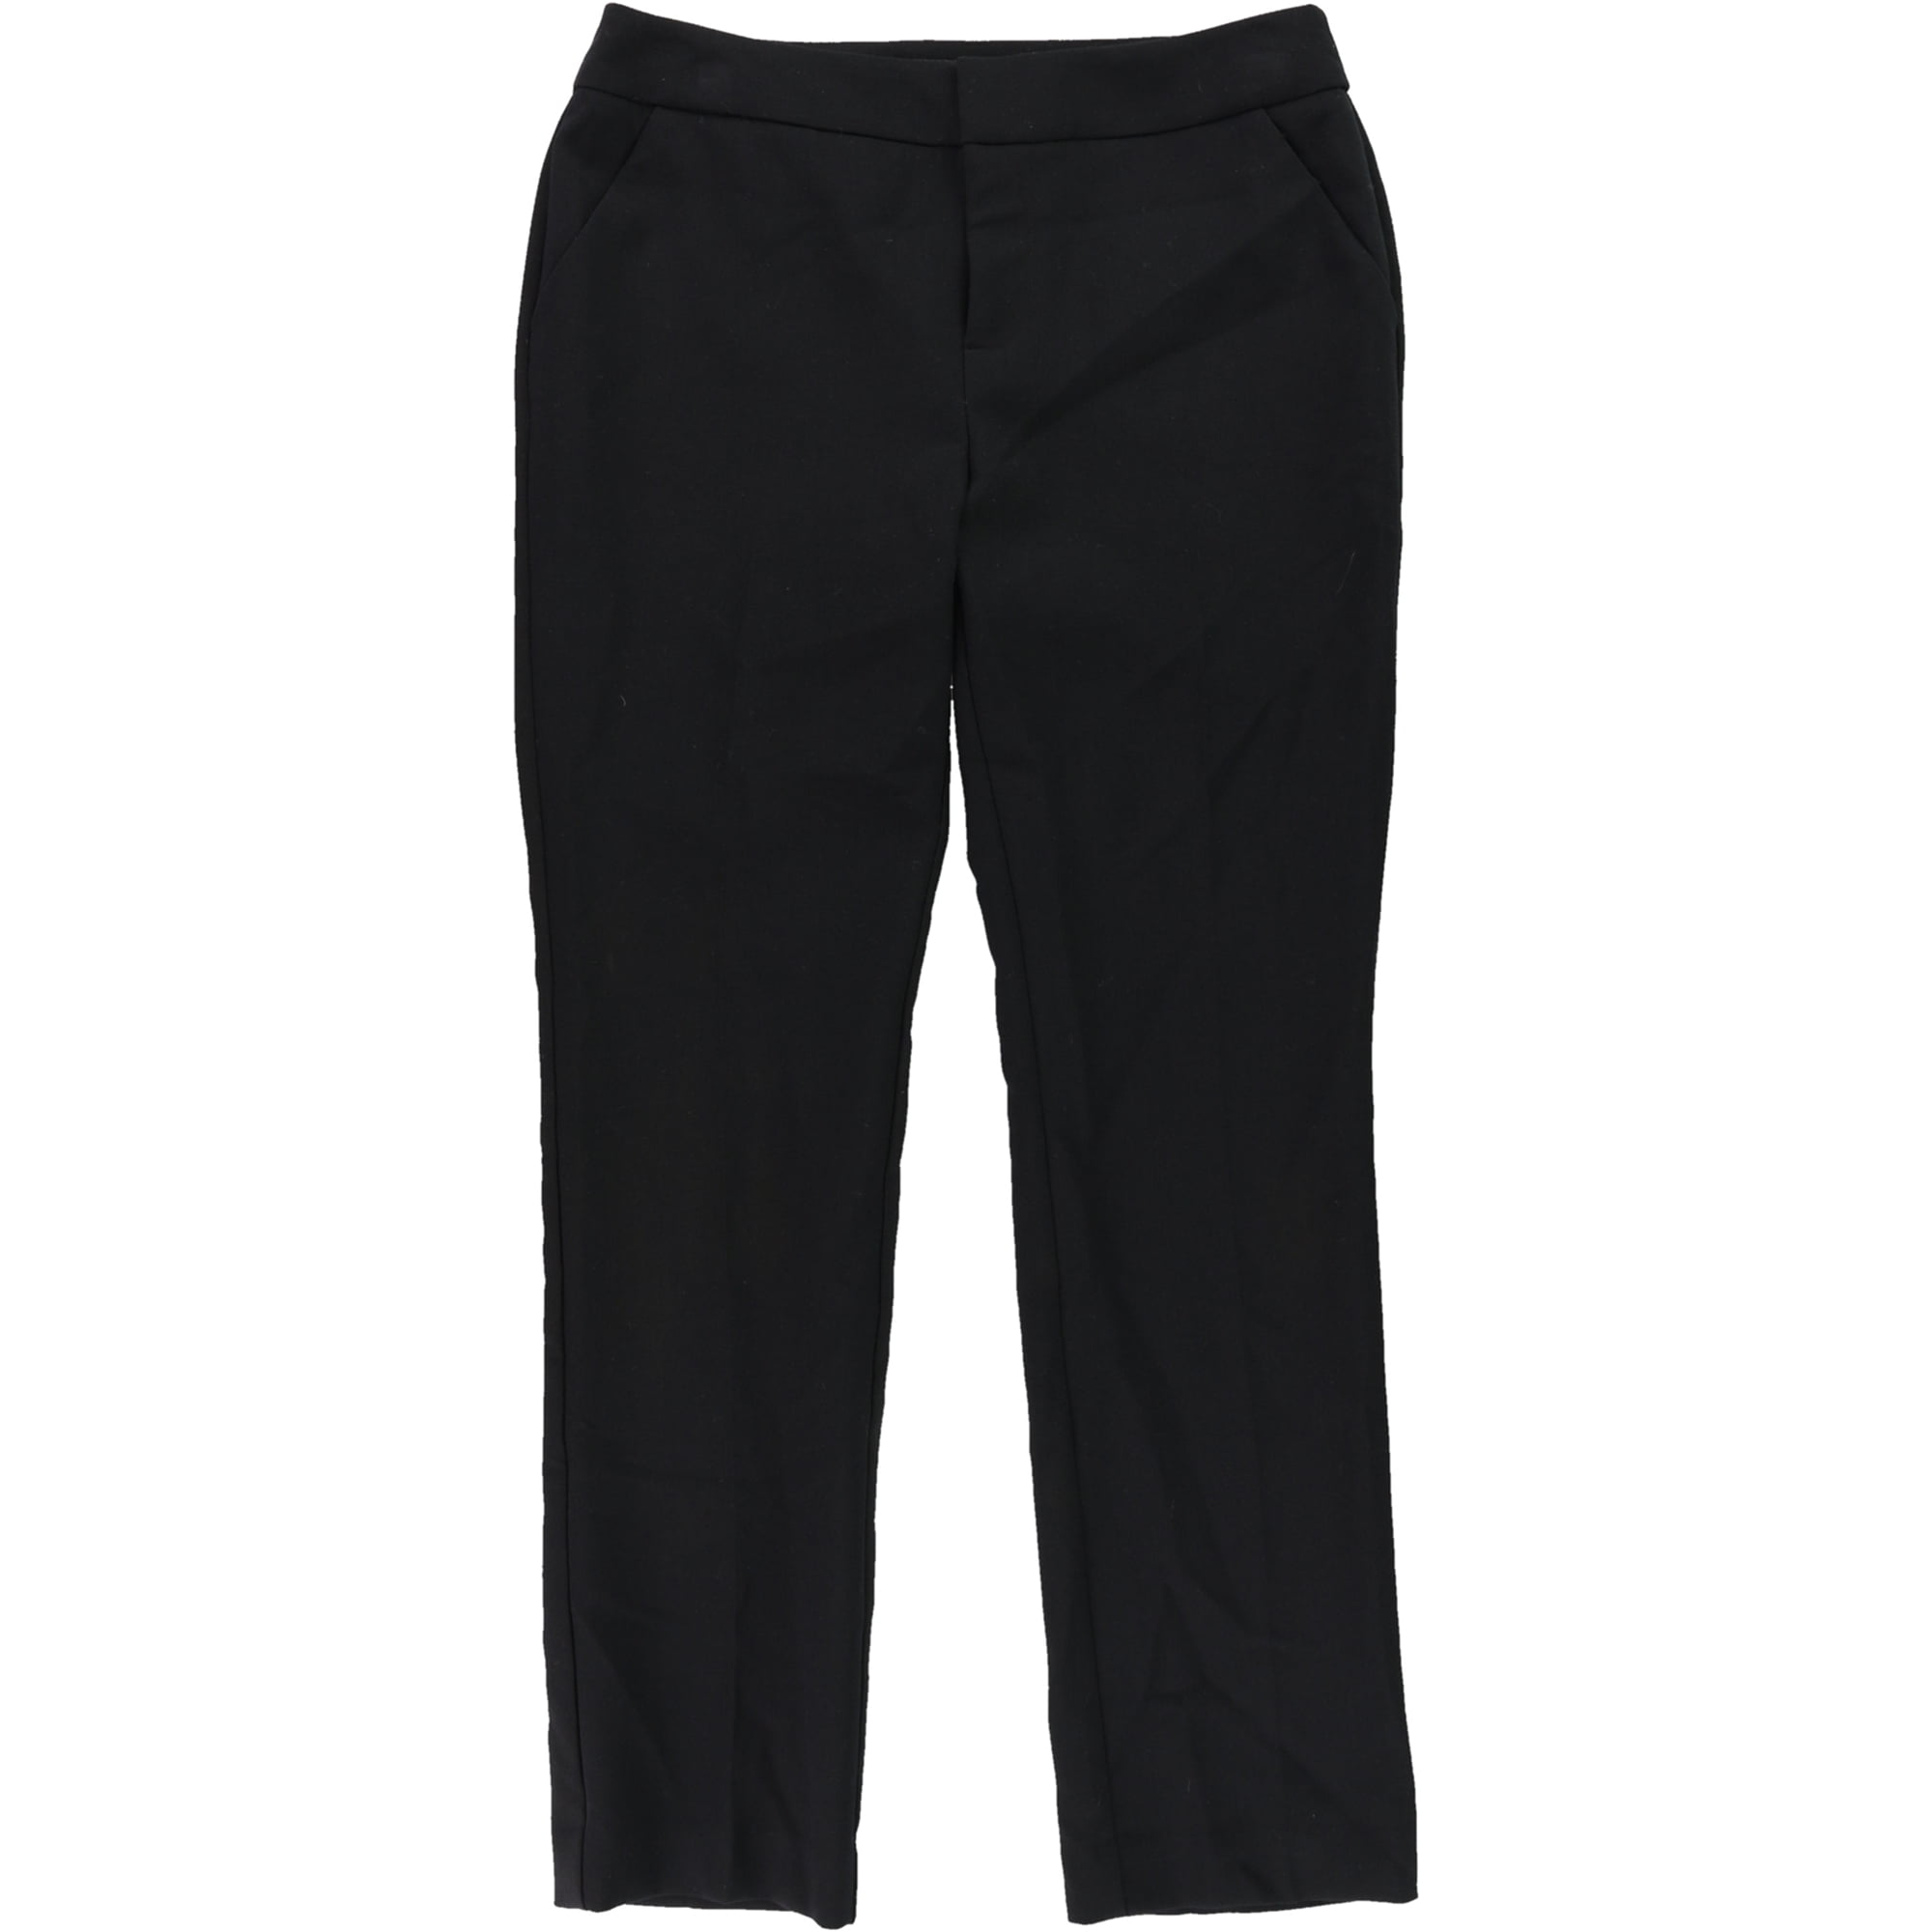 Black 54-30 Ed Garments MenS 2588 Easy Fit Hidden Waistband Dress Pants